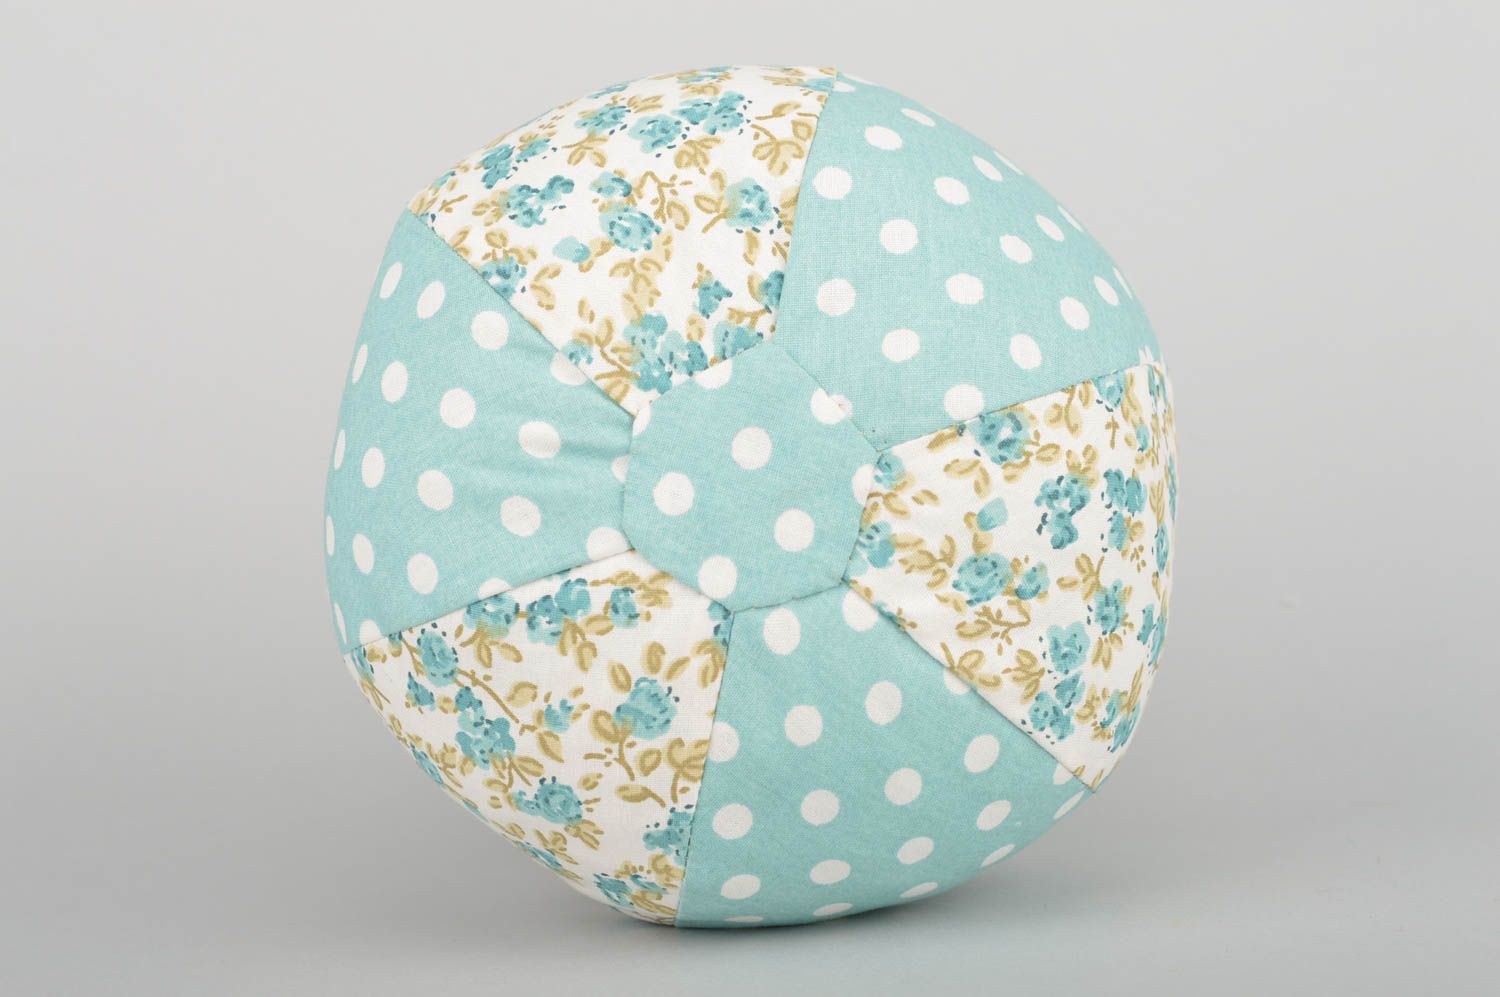 Blue soft handmade fabric toy ball for children handmade nursery decor ideas photo 2